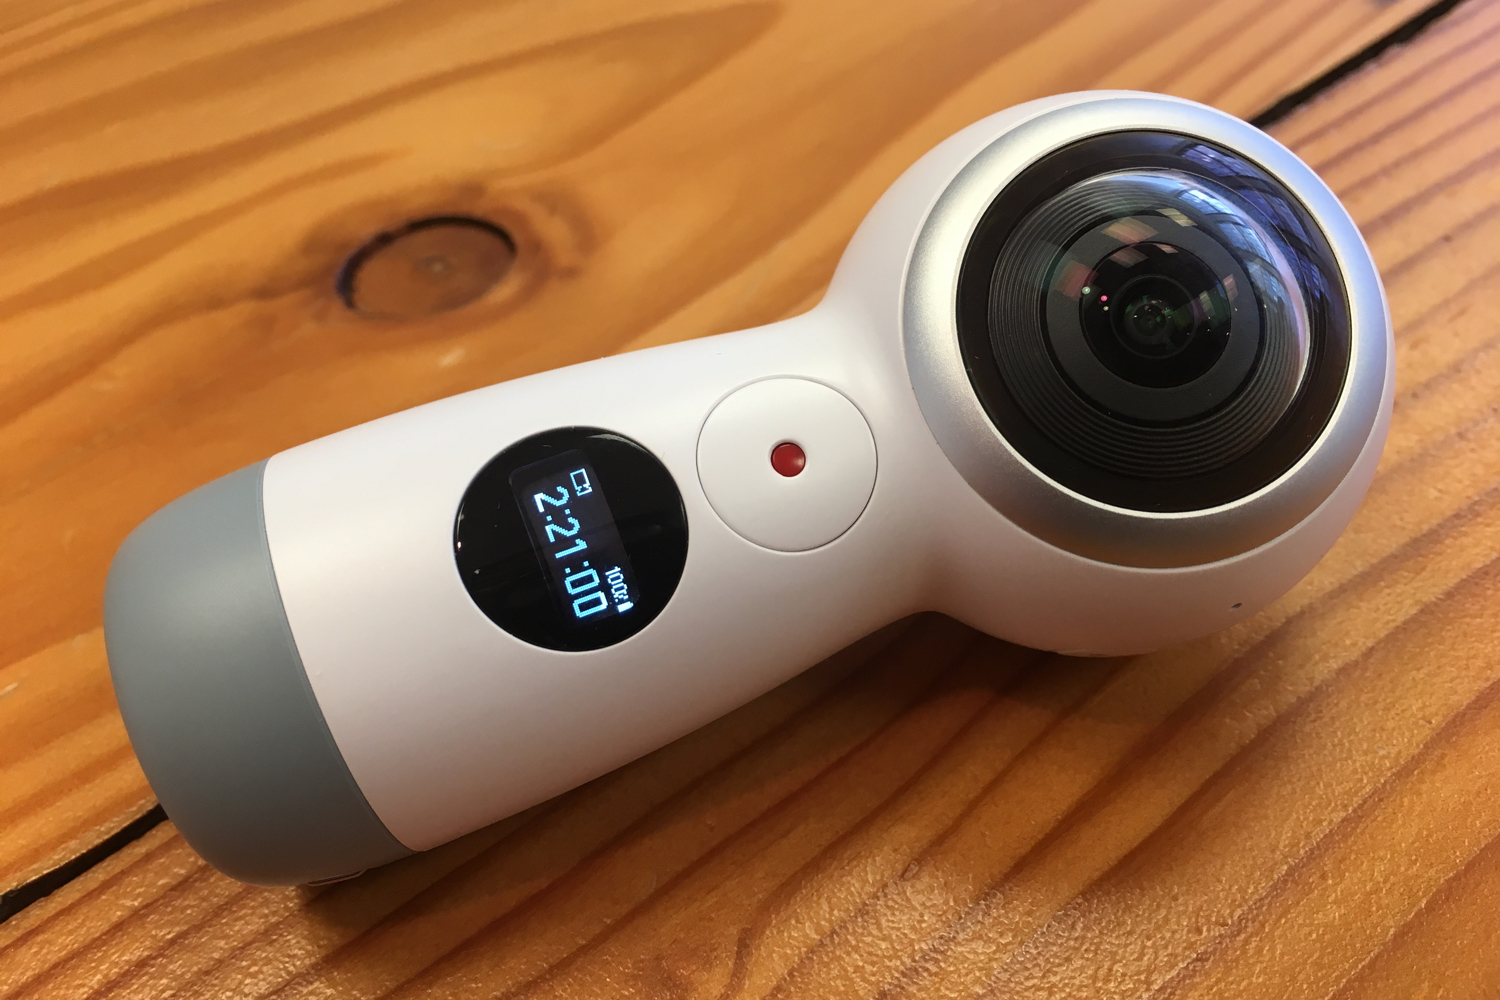 Samsung S New Gear 360 Camera Live Streams 360 Degree Videos To Facebook Youtube Digital Trends